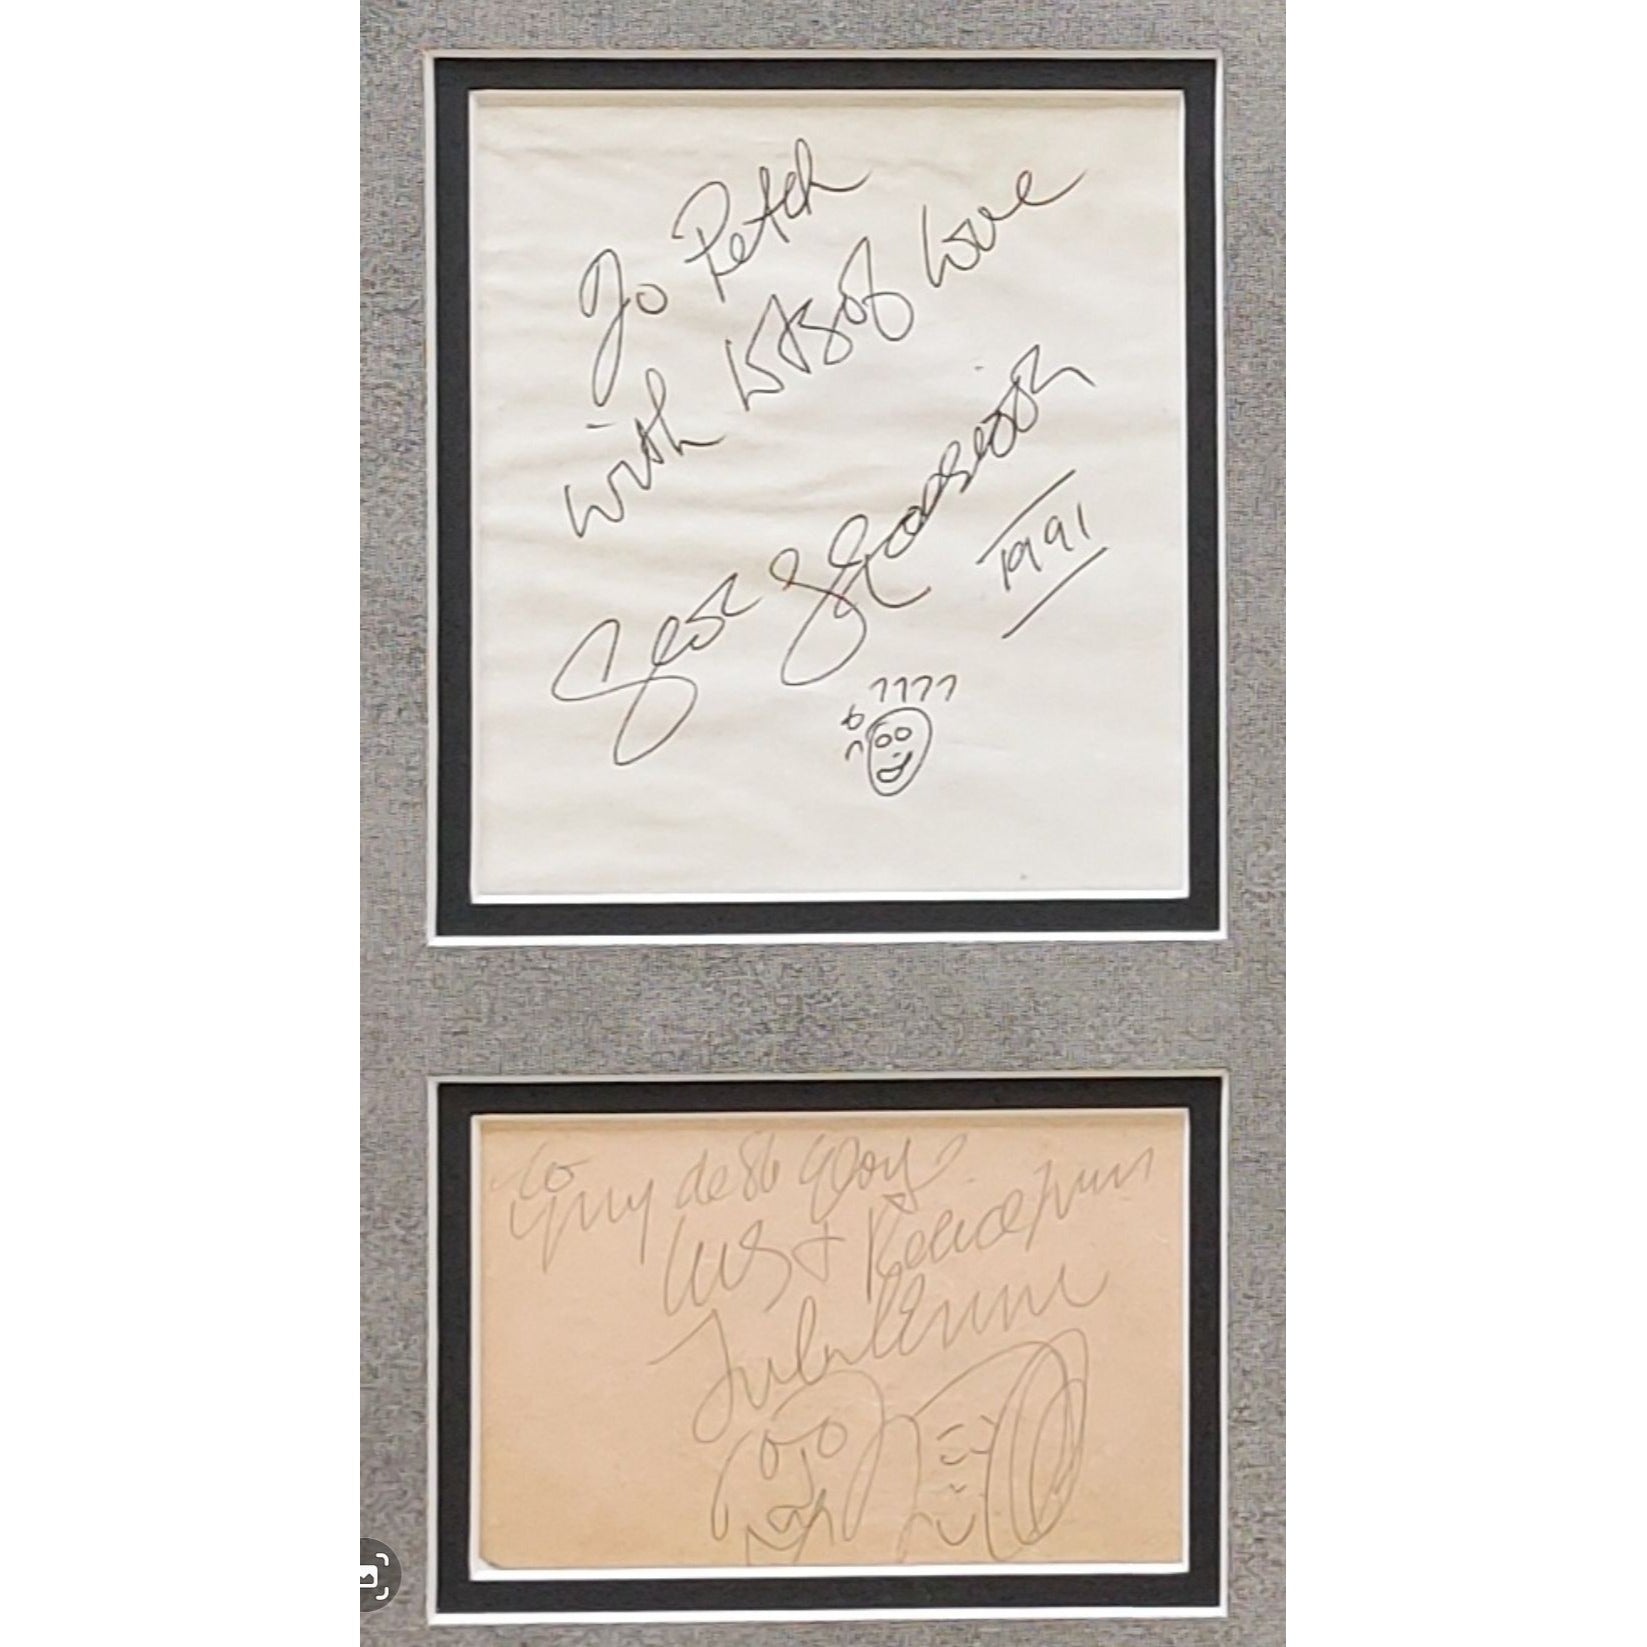 Muhammed Ali Paul McCartney John Lennon The Beatles framed 24x35 and signed with proof